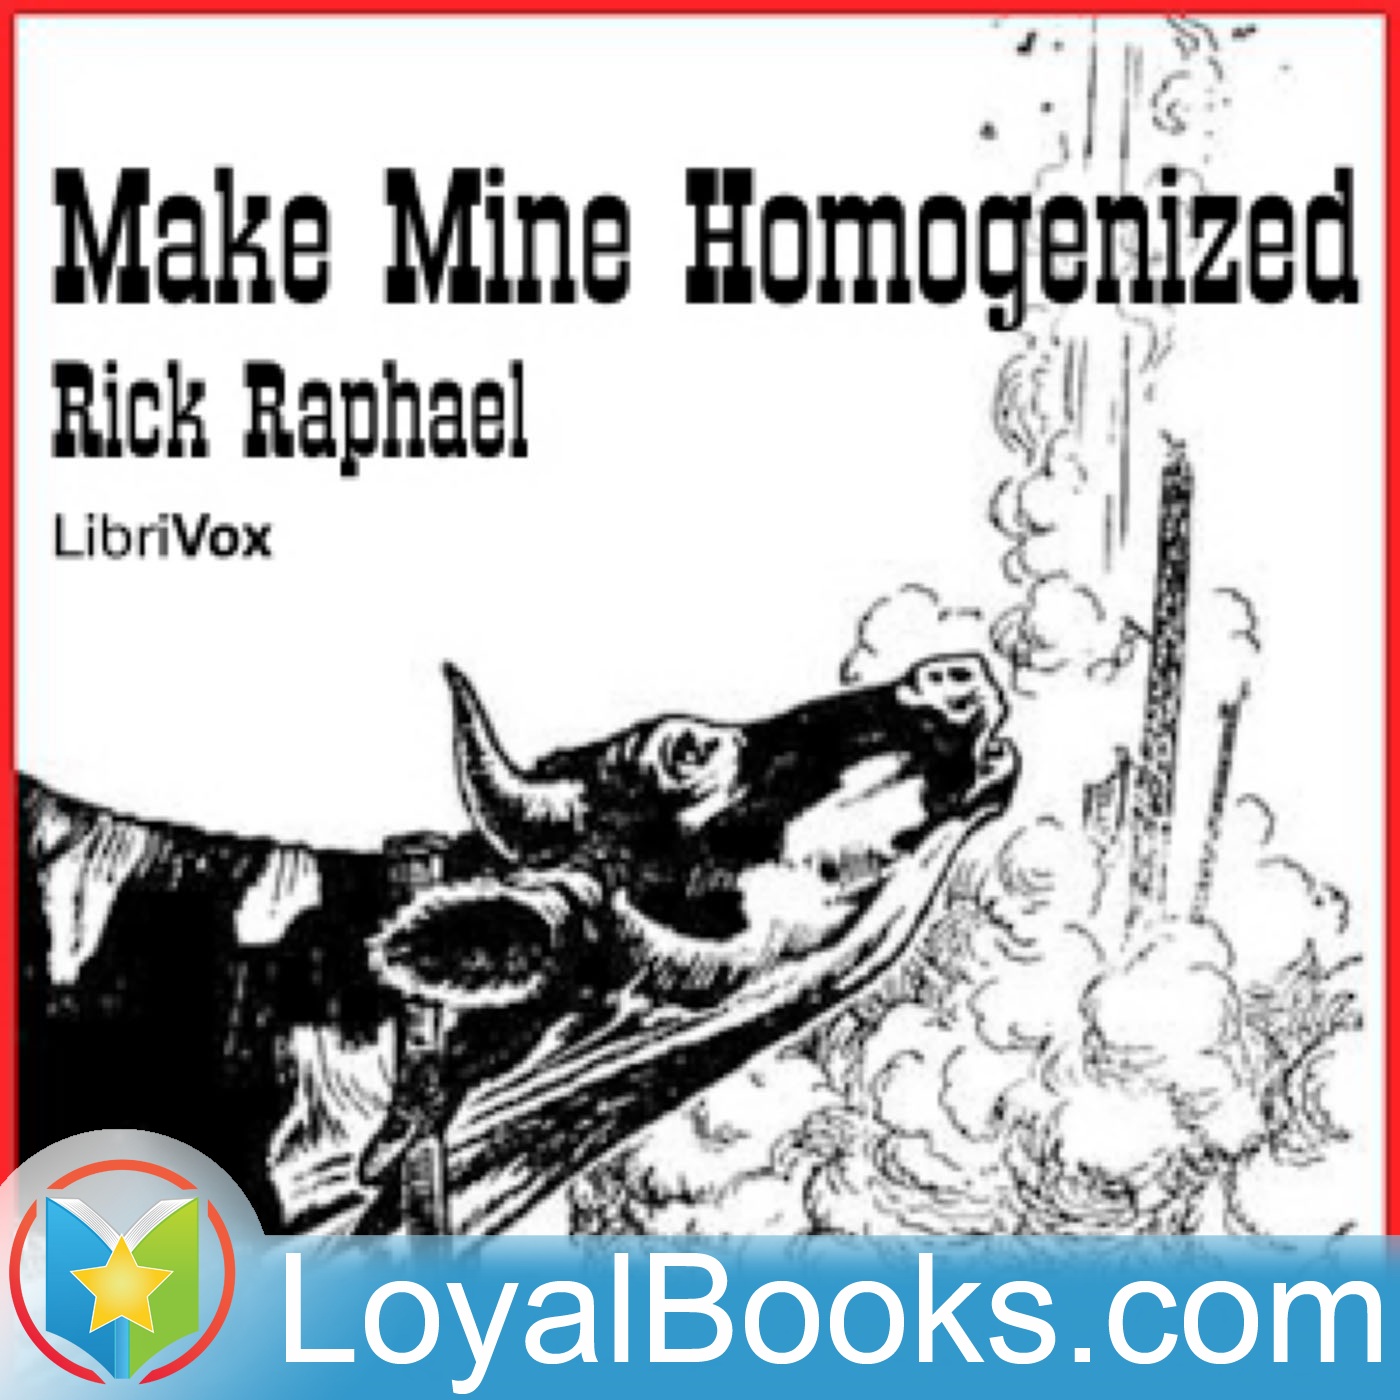 Make Mine Homogenized by Rick Raphael